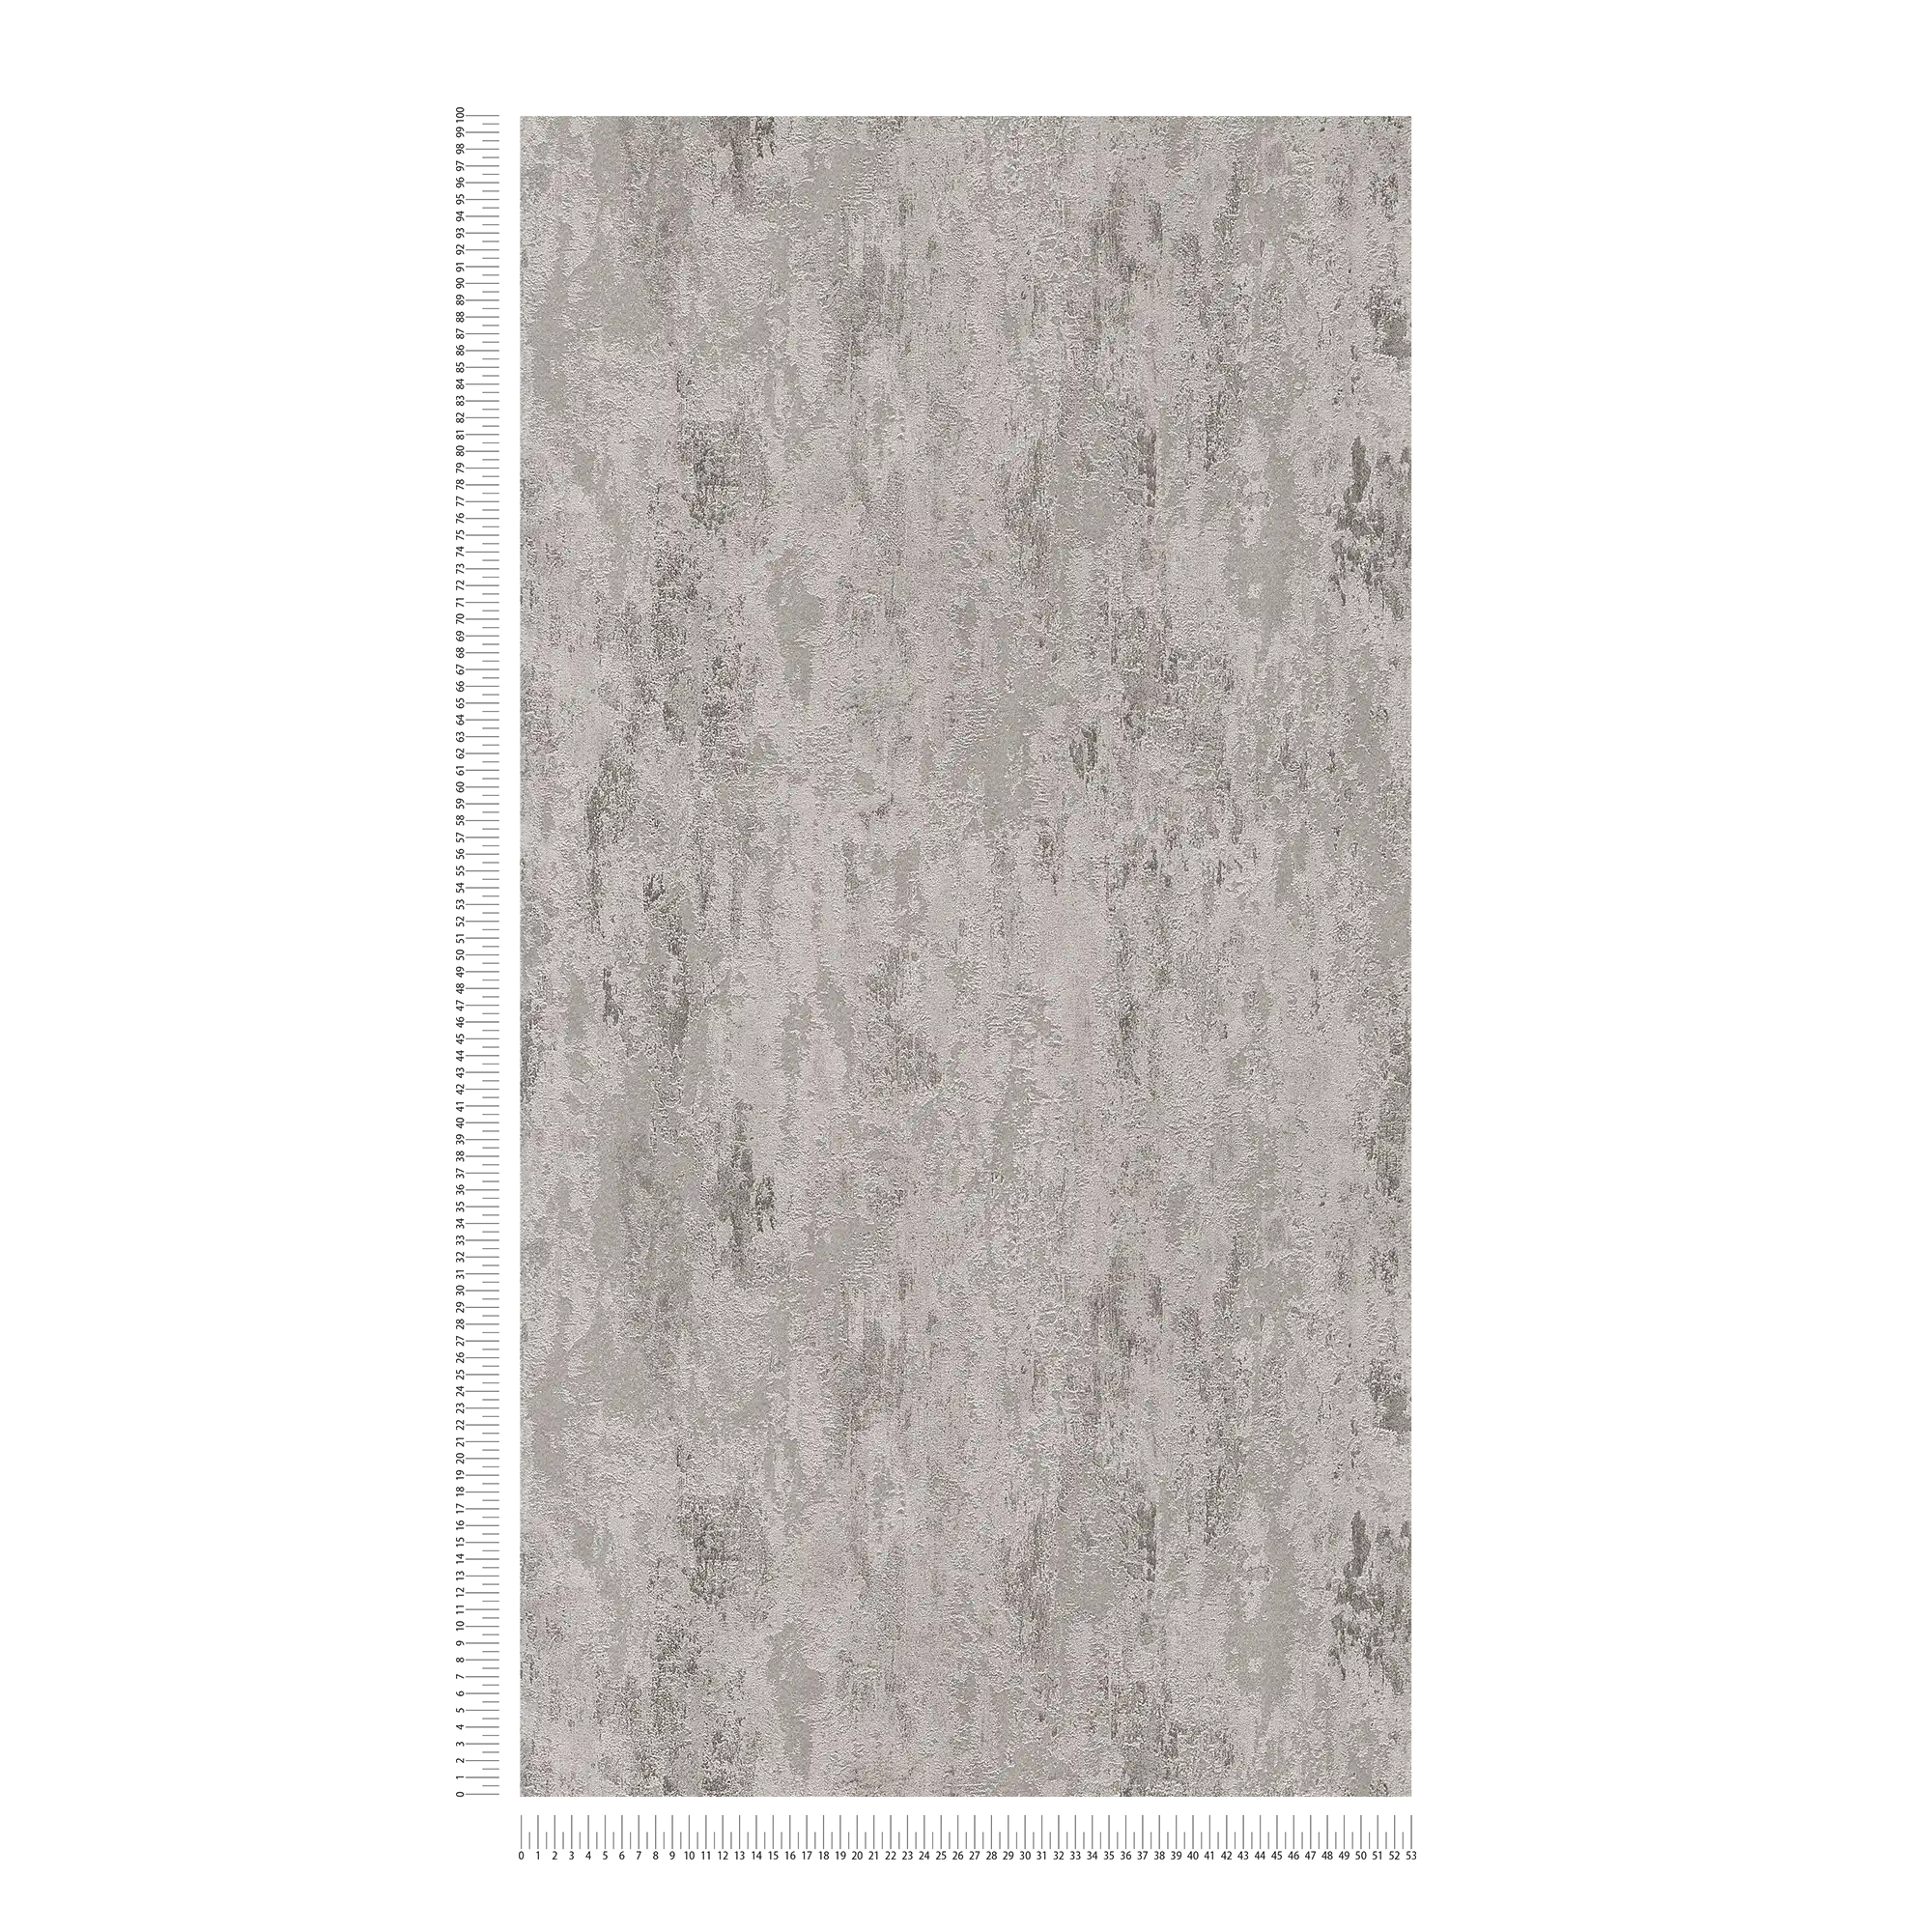             Rost Vliestapete mit Strukturmuster – Grau, Silber
        